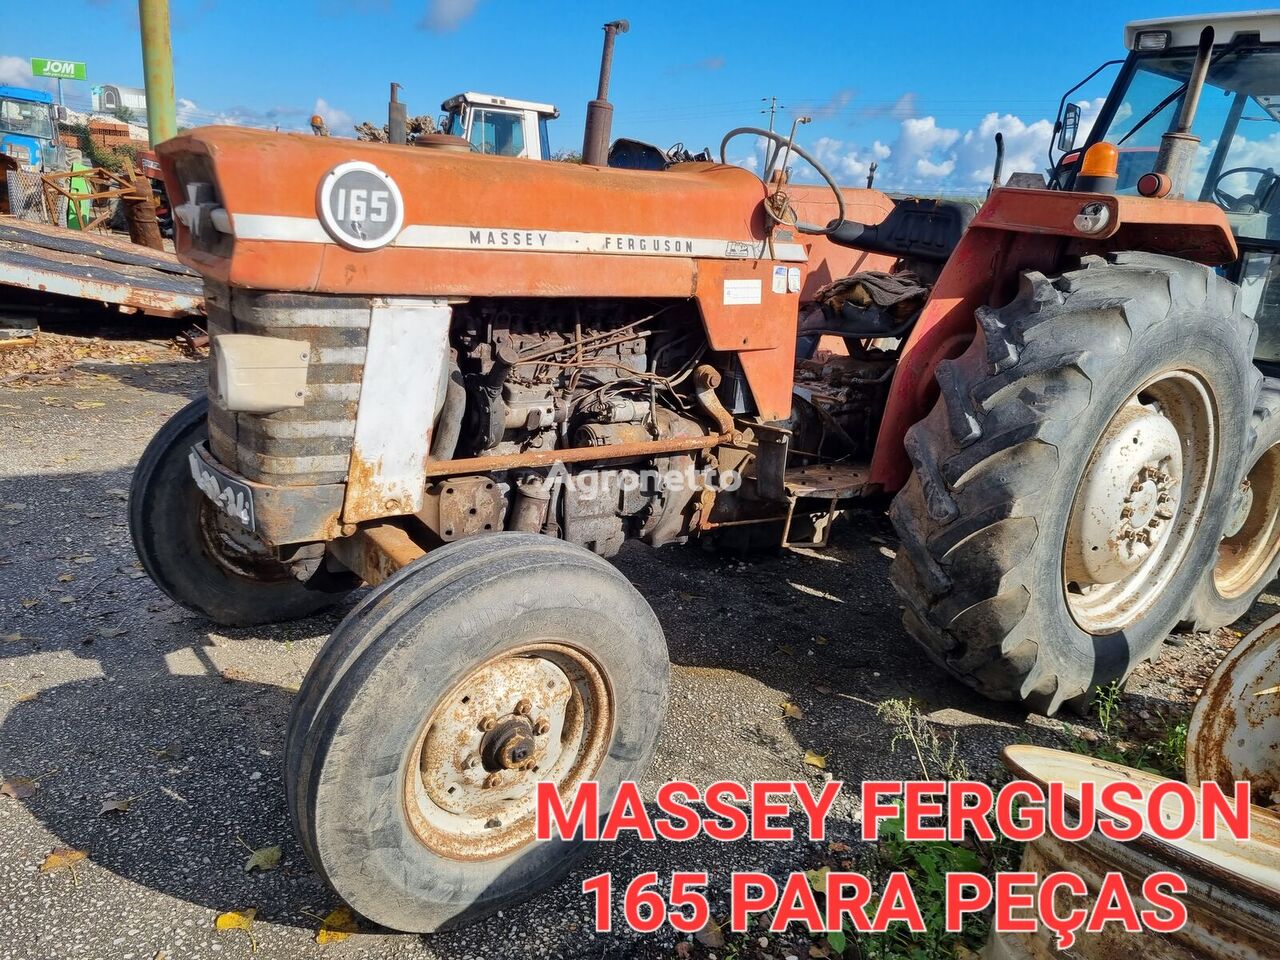 Massey Ferguson 165 wheel tractor